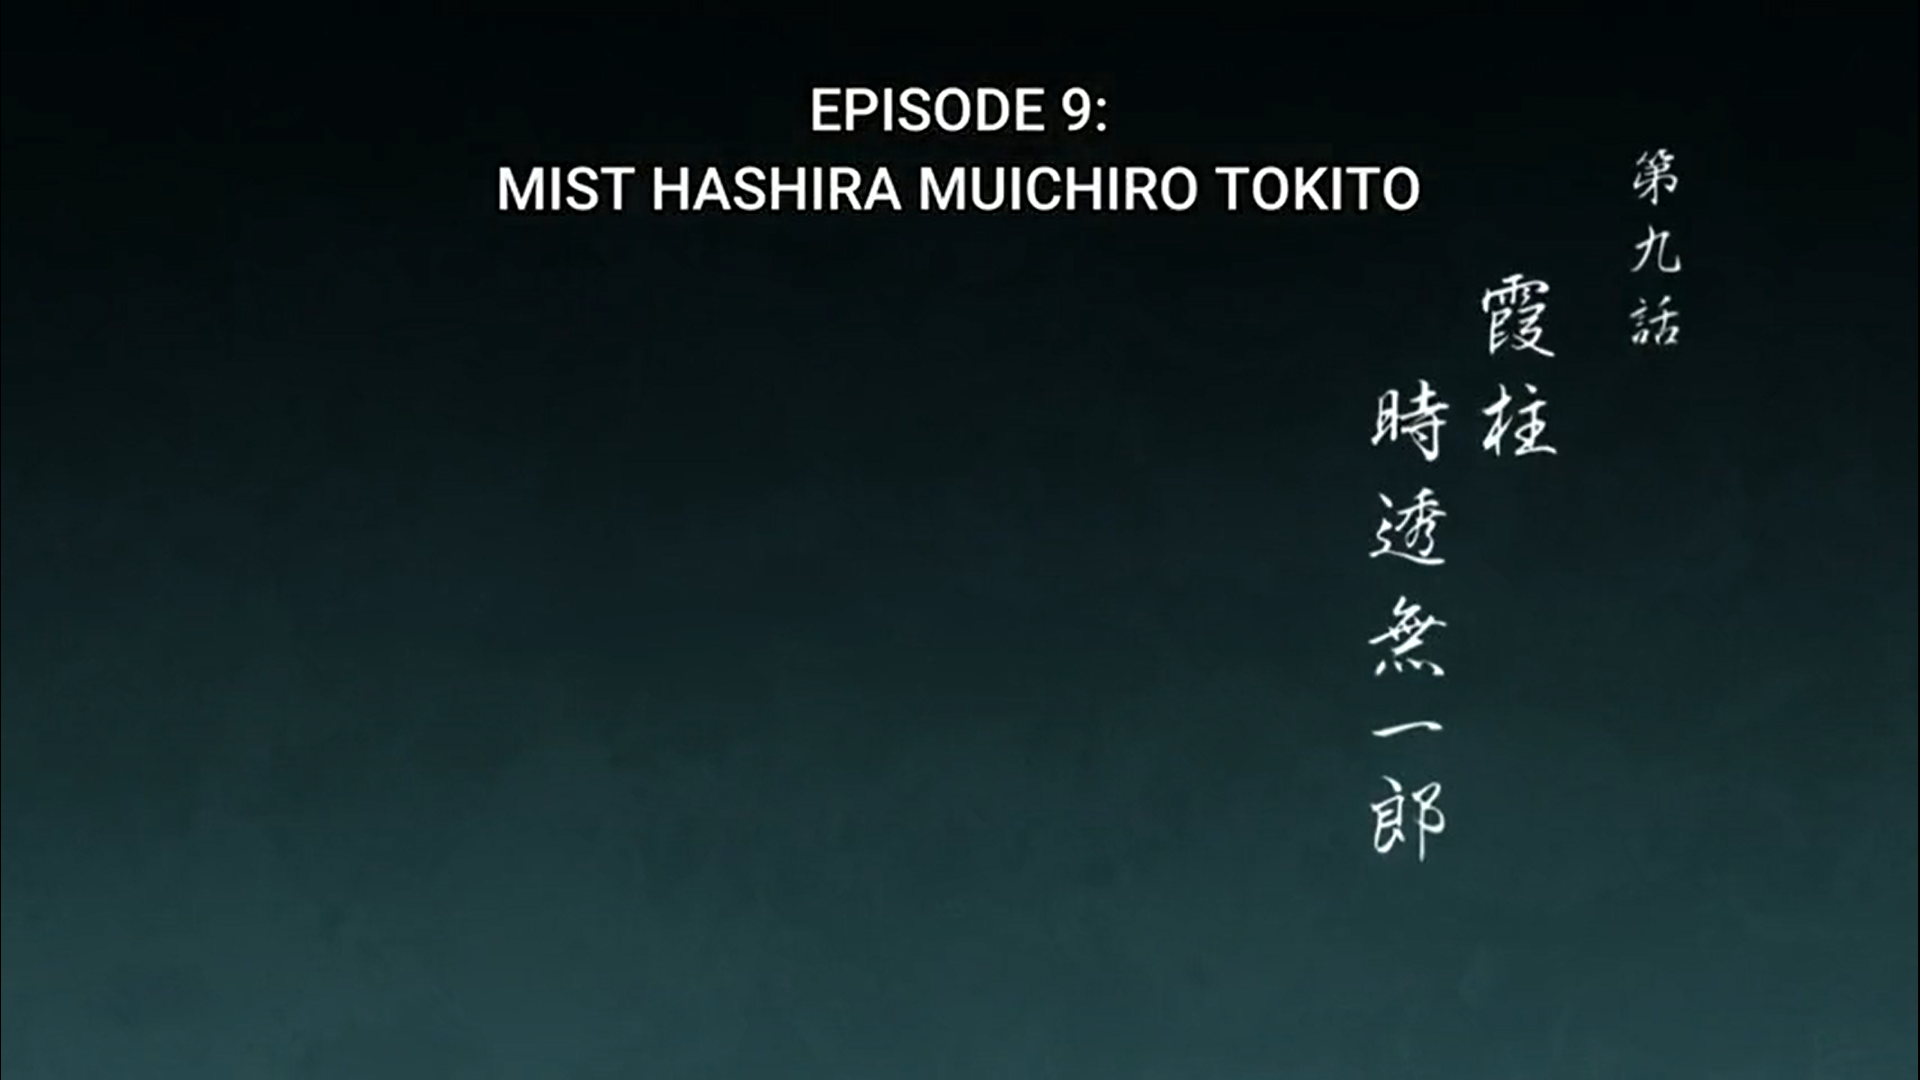 Demon Slayer Season 3 Episode 9 Review: Mist Hashira Muichiro Tokito